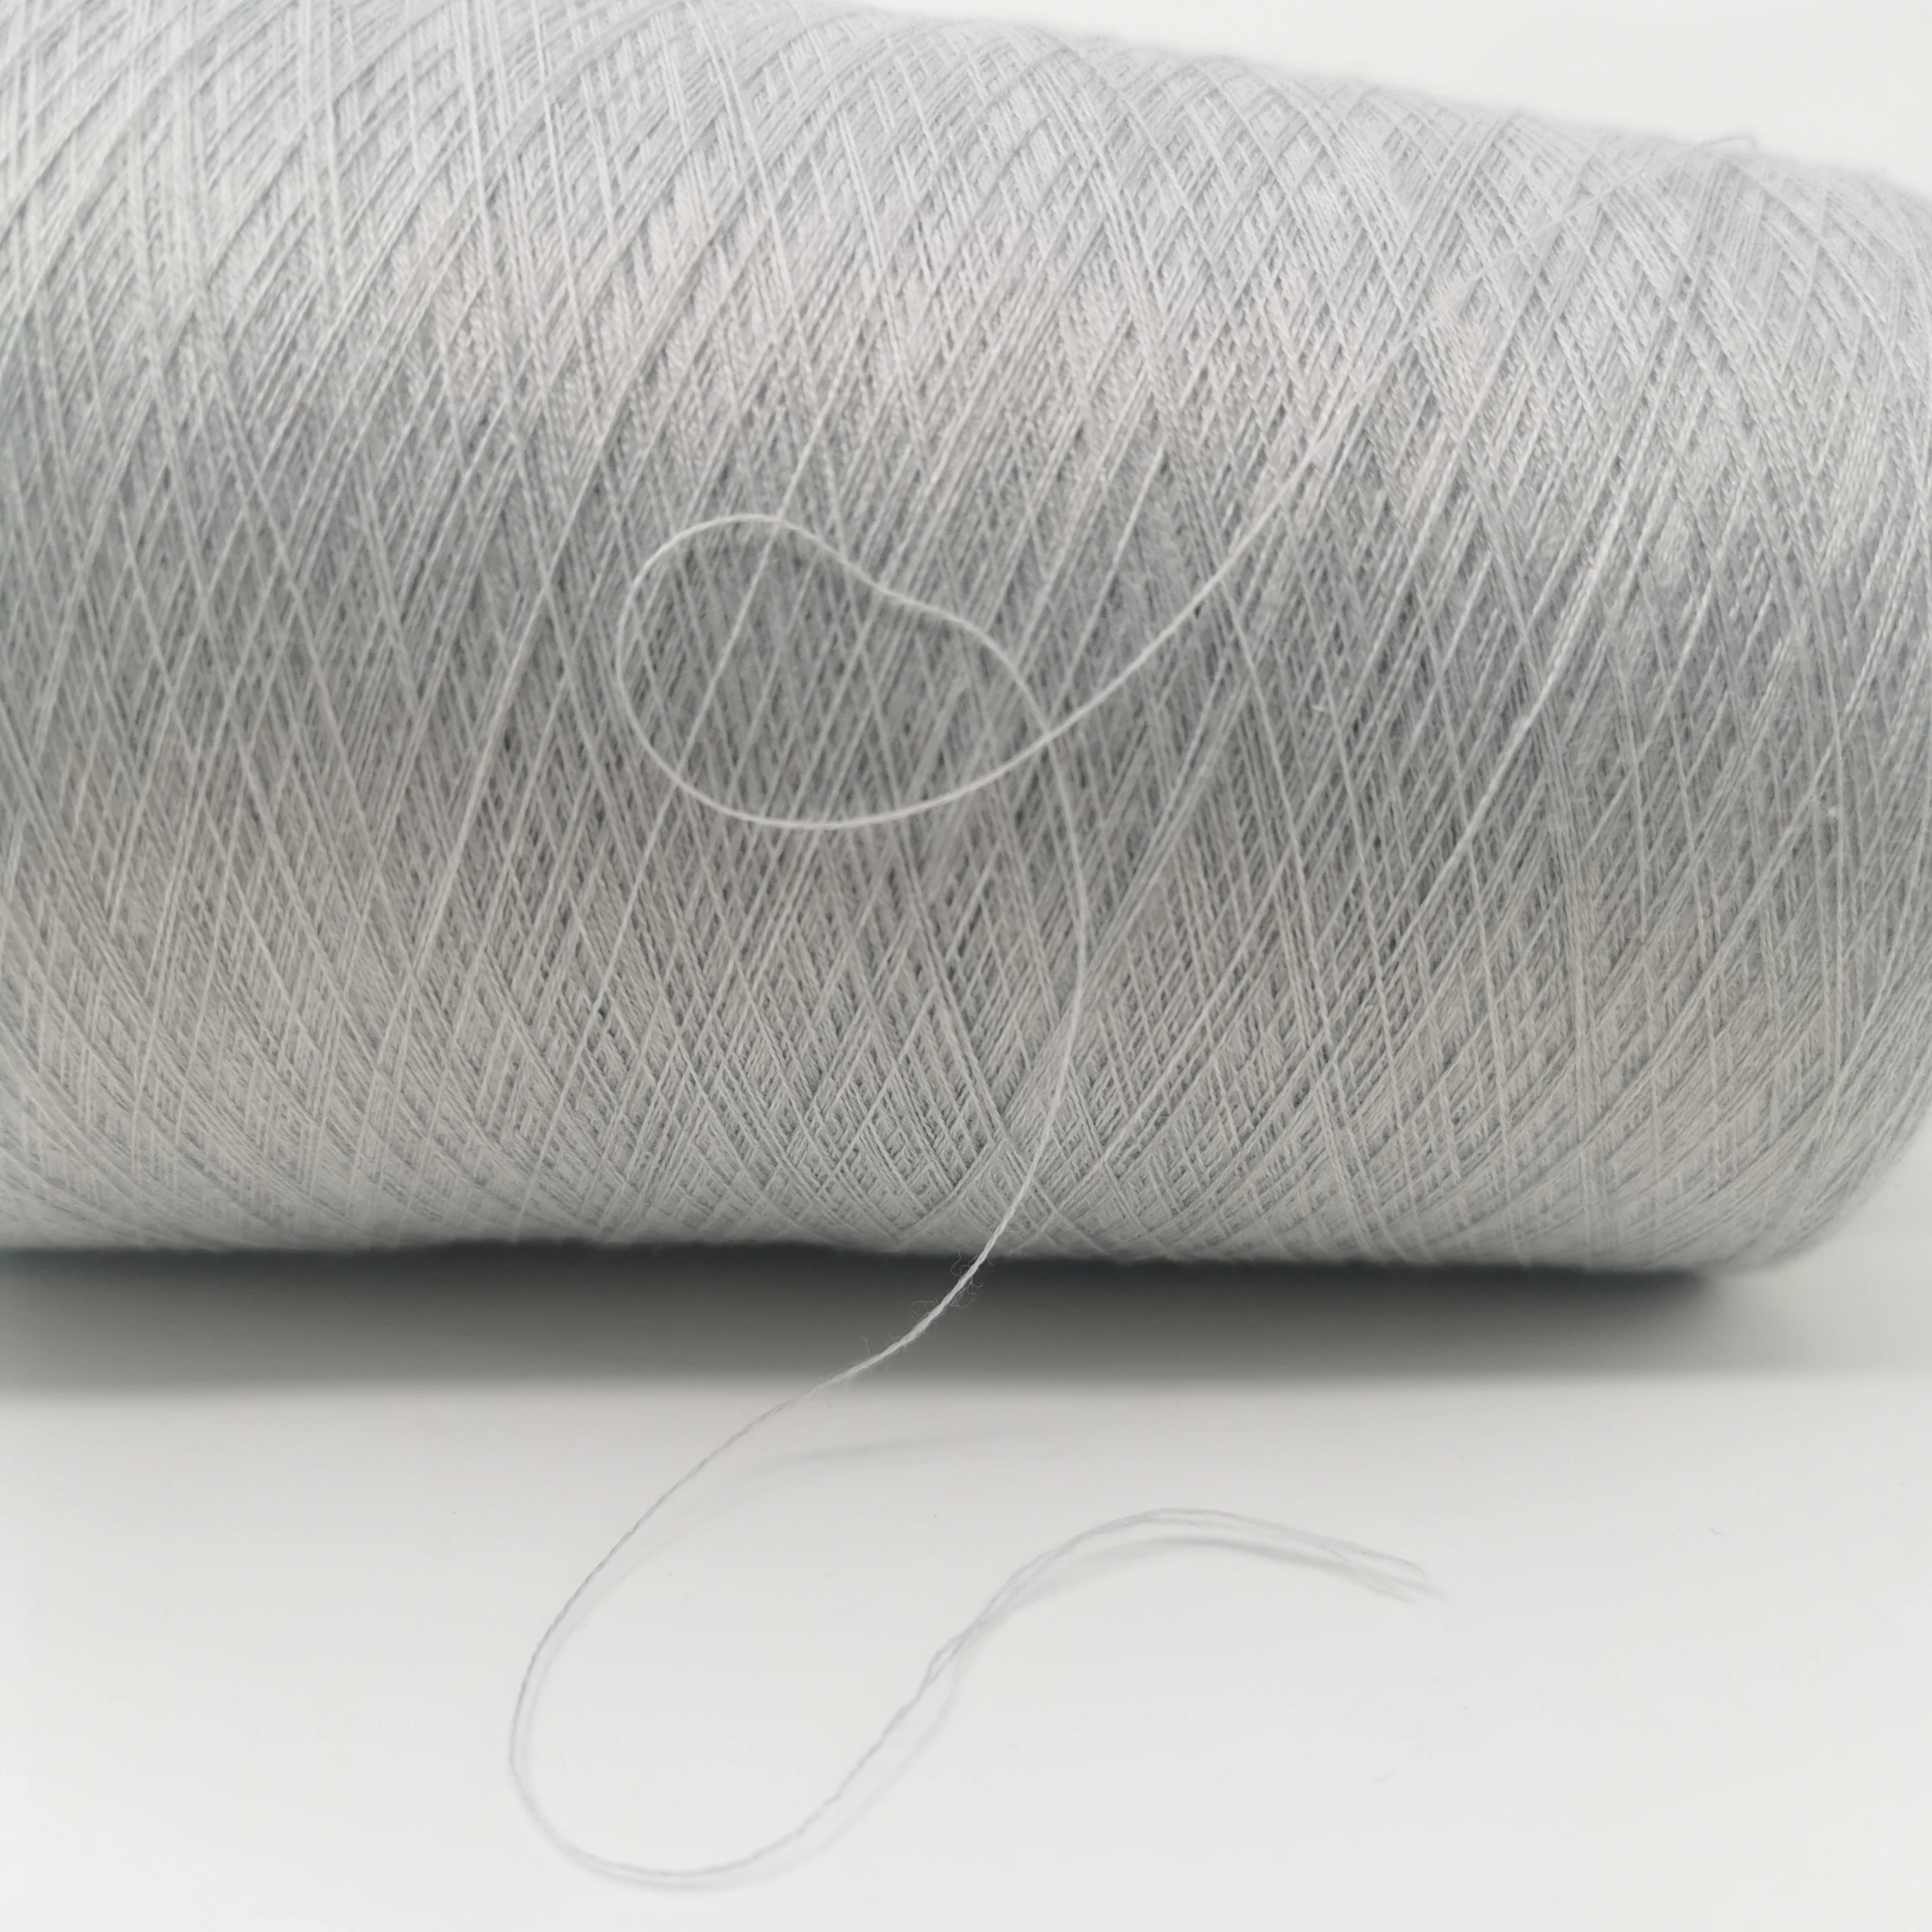 anti static filter weaving fabric conductive yarn sew thread